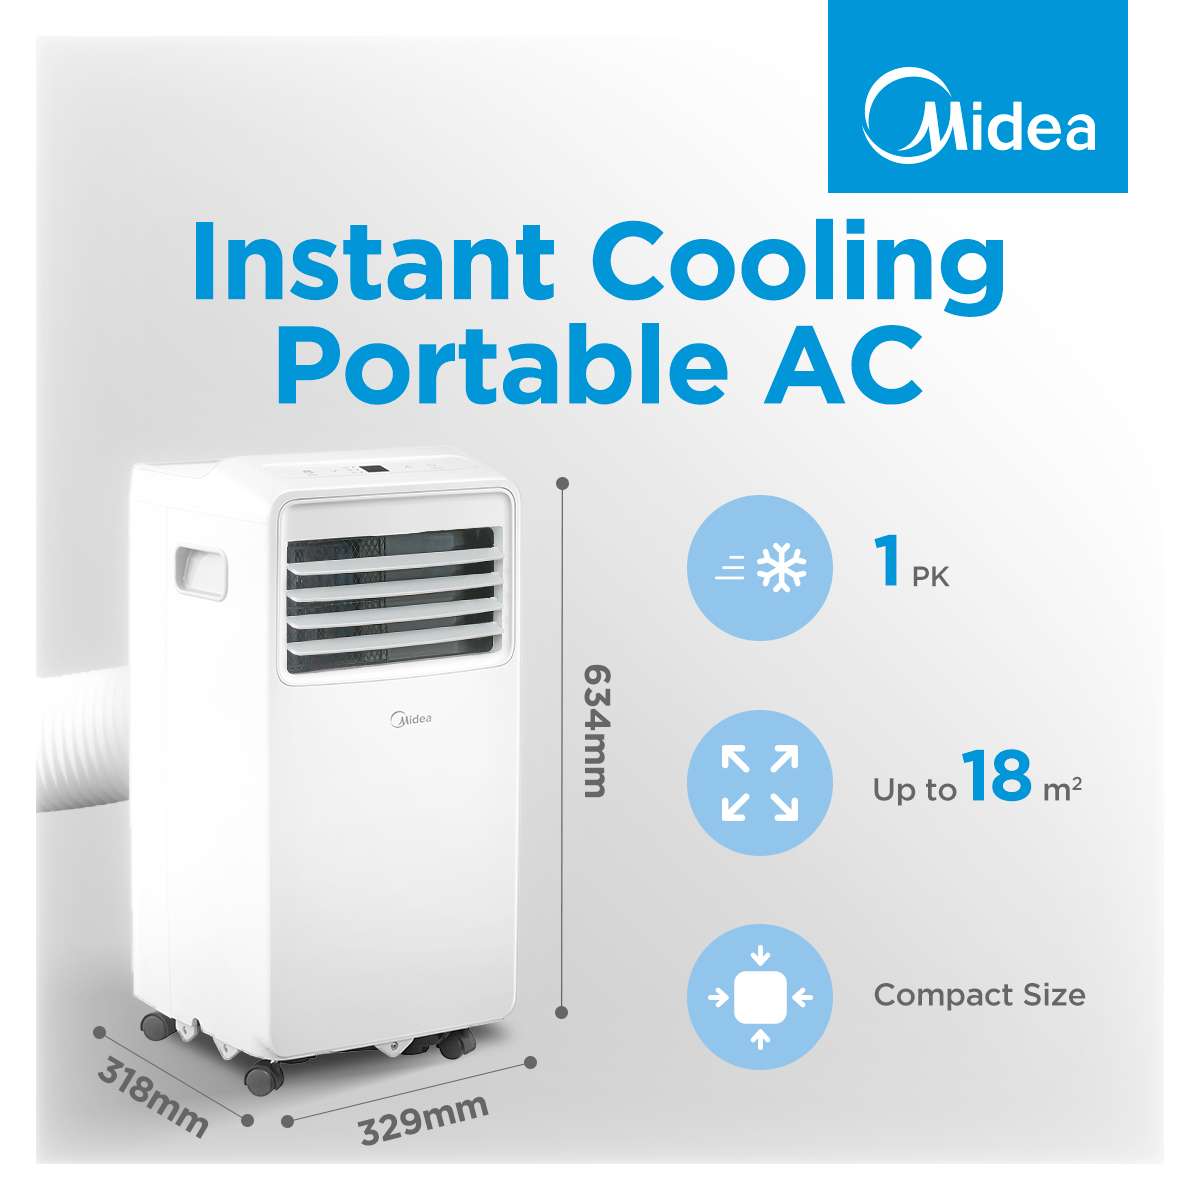 AC Portable Midea 1 PK - PHA Series